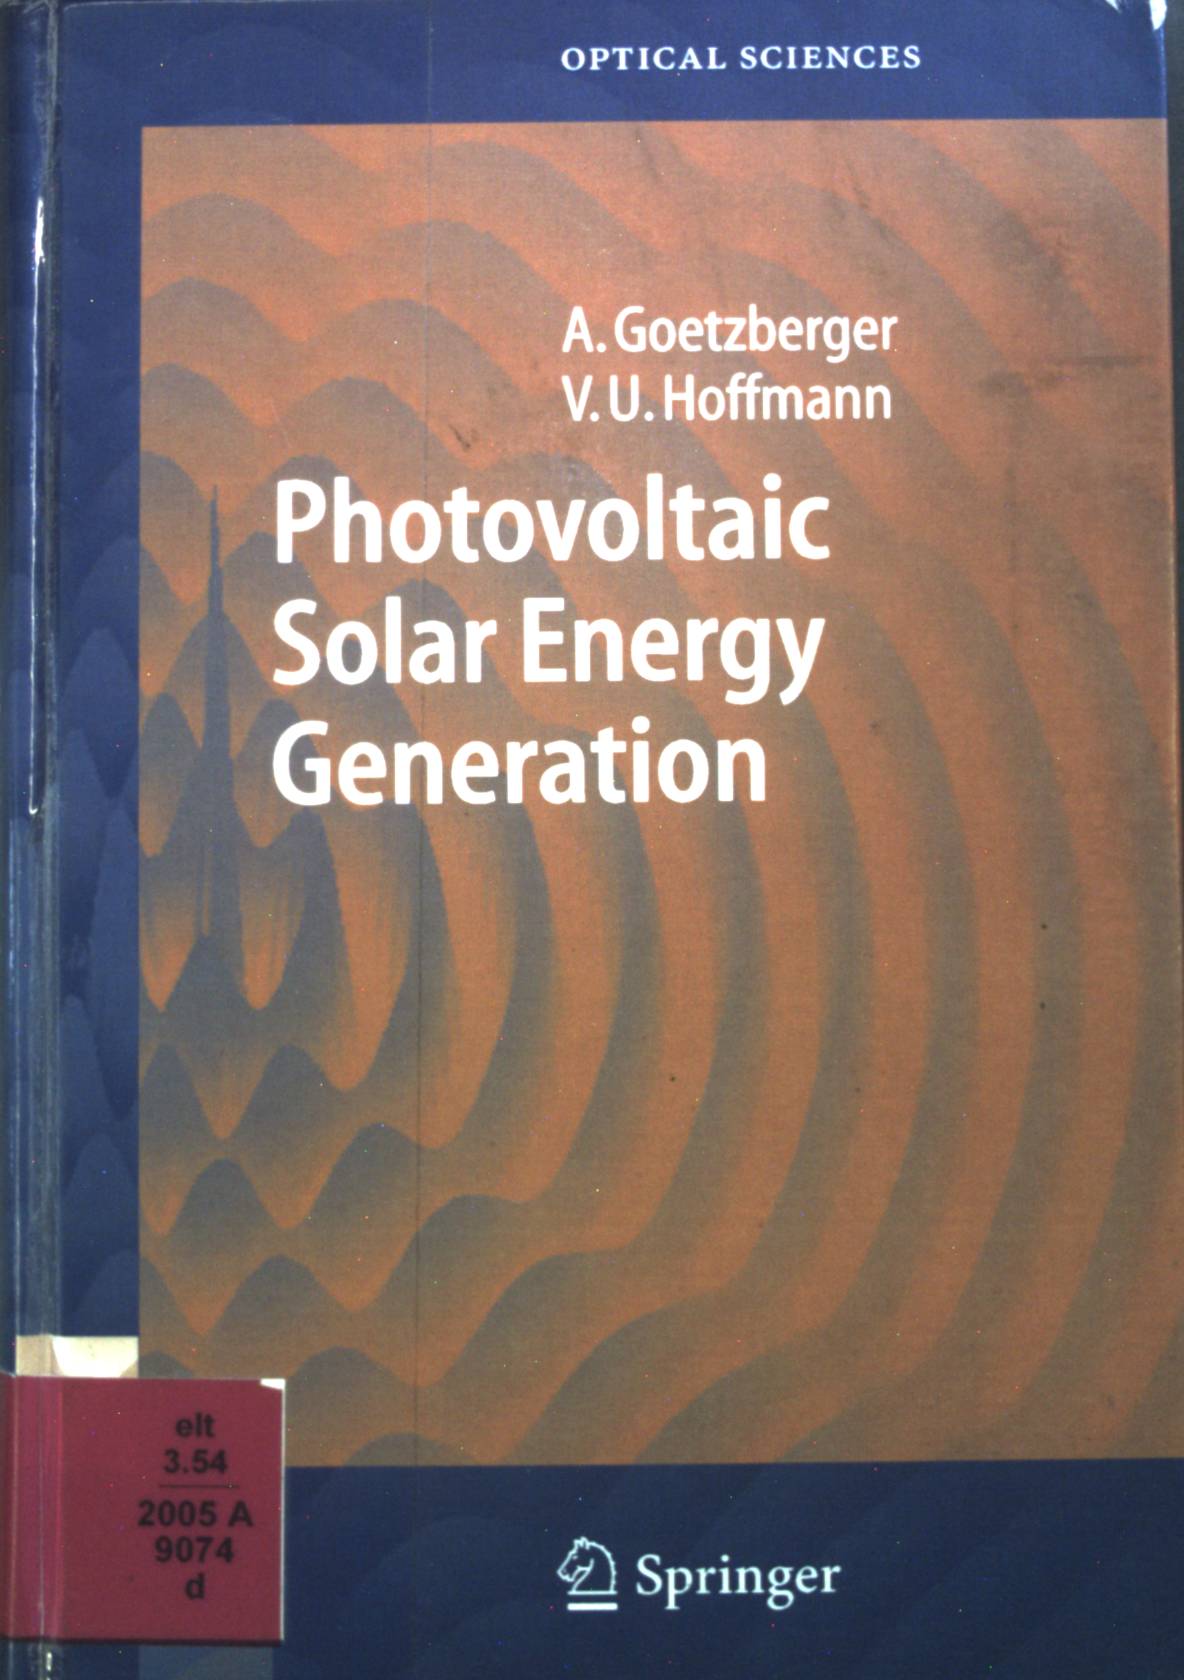 Photovoltaic solar energy generation. Springer series in optical sciences ; 112 - Goetzberger, Adolf and Volker U. Hoffmann